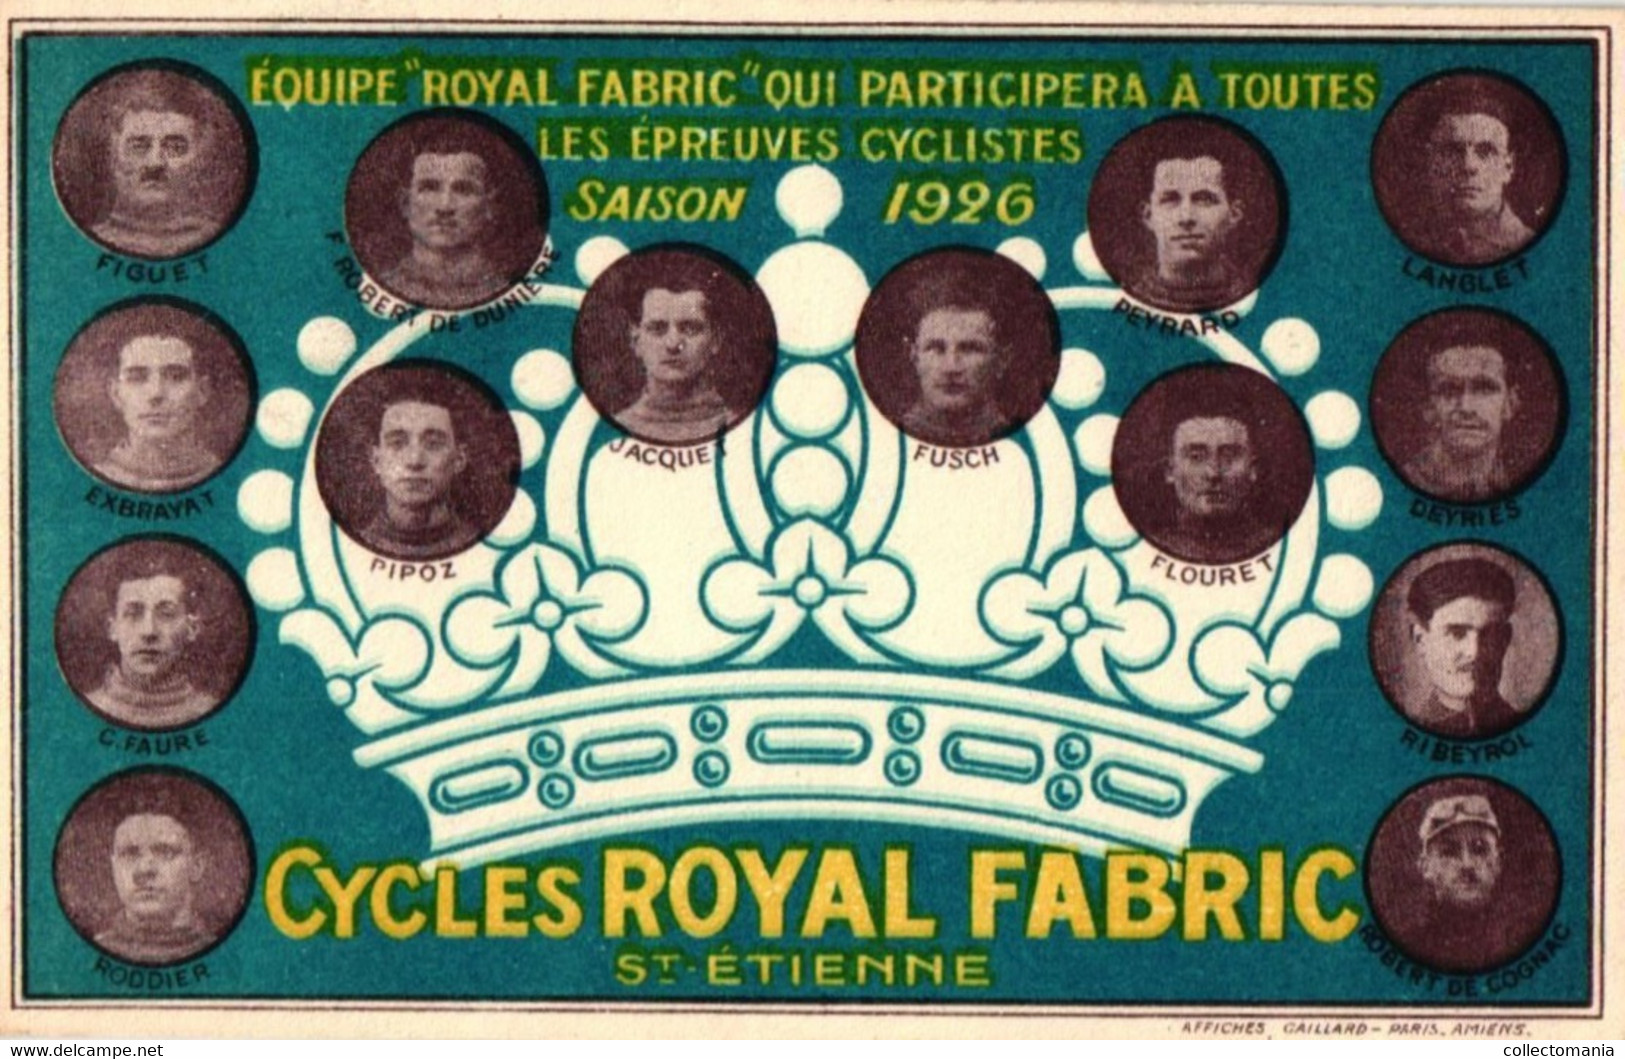 1 CP CYCLES Royal Fabric St.ETIENNE Fietsen Fabriek  Saison 1926 Equipe Royal Fabric  Cyclistes  Impr. Affiches Gaillard - Radsport